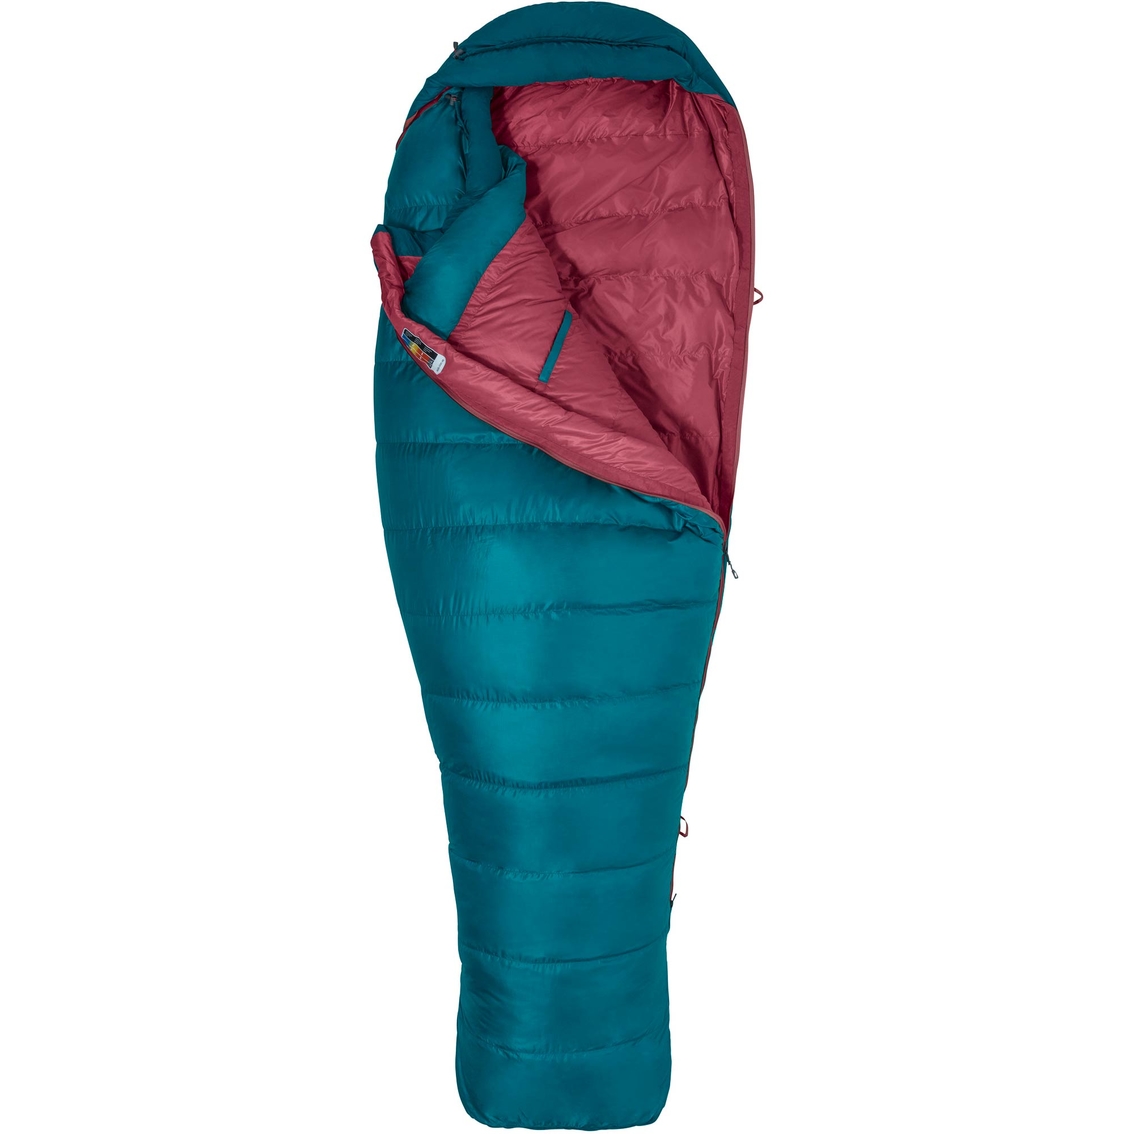 Marmot Women's Teton Sleeping Bag Left Zip - Image 3 of 5